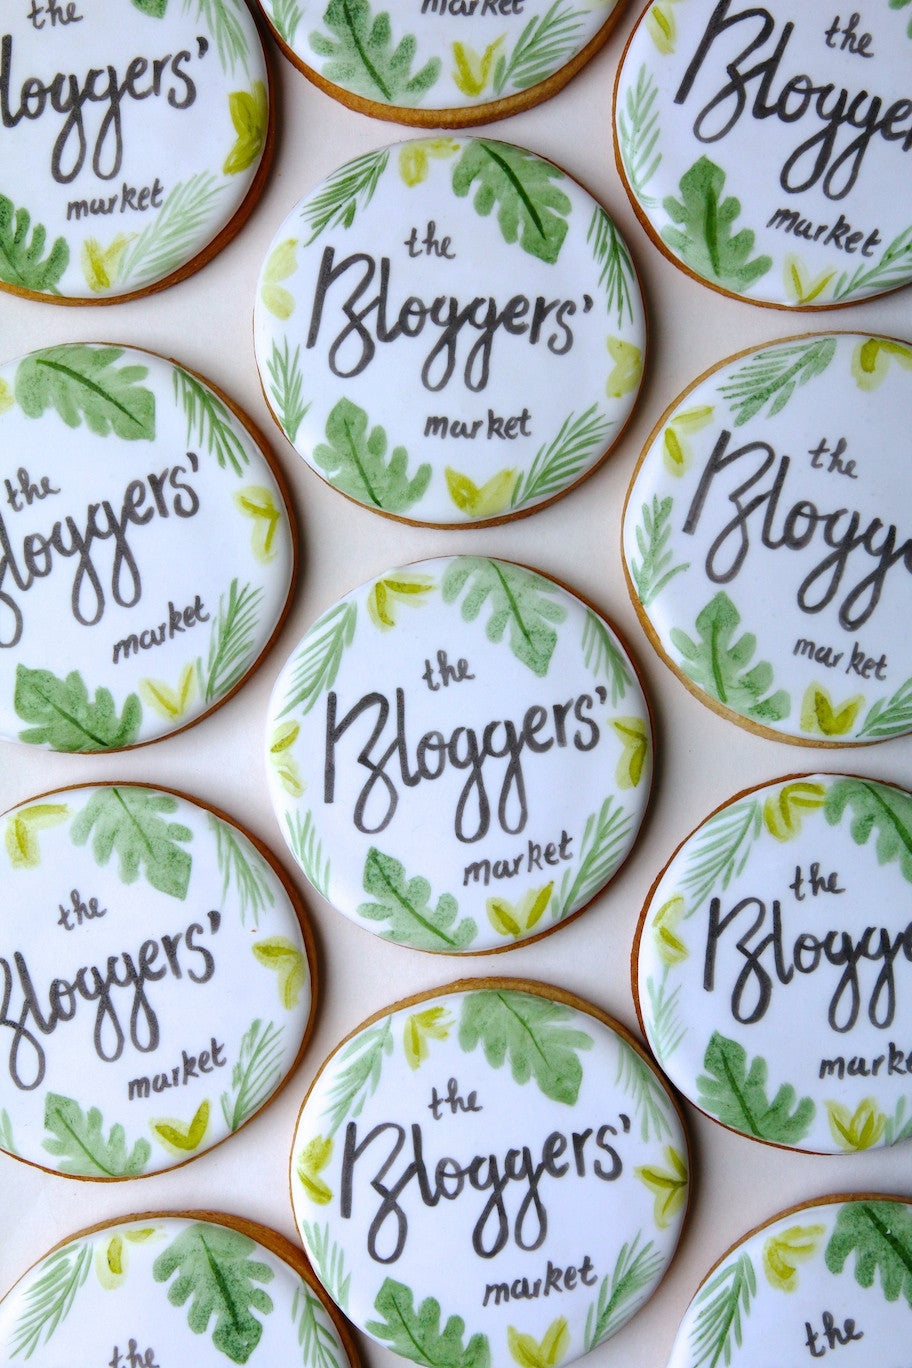 Bloggers Market Branded Biscuits